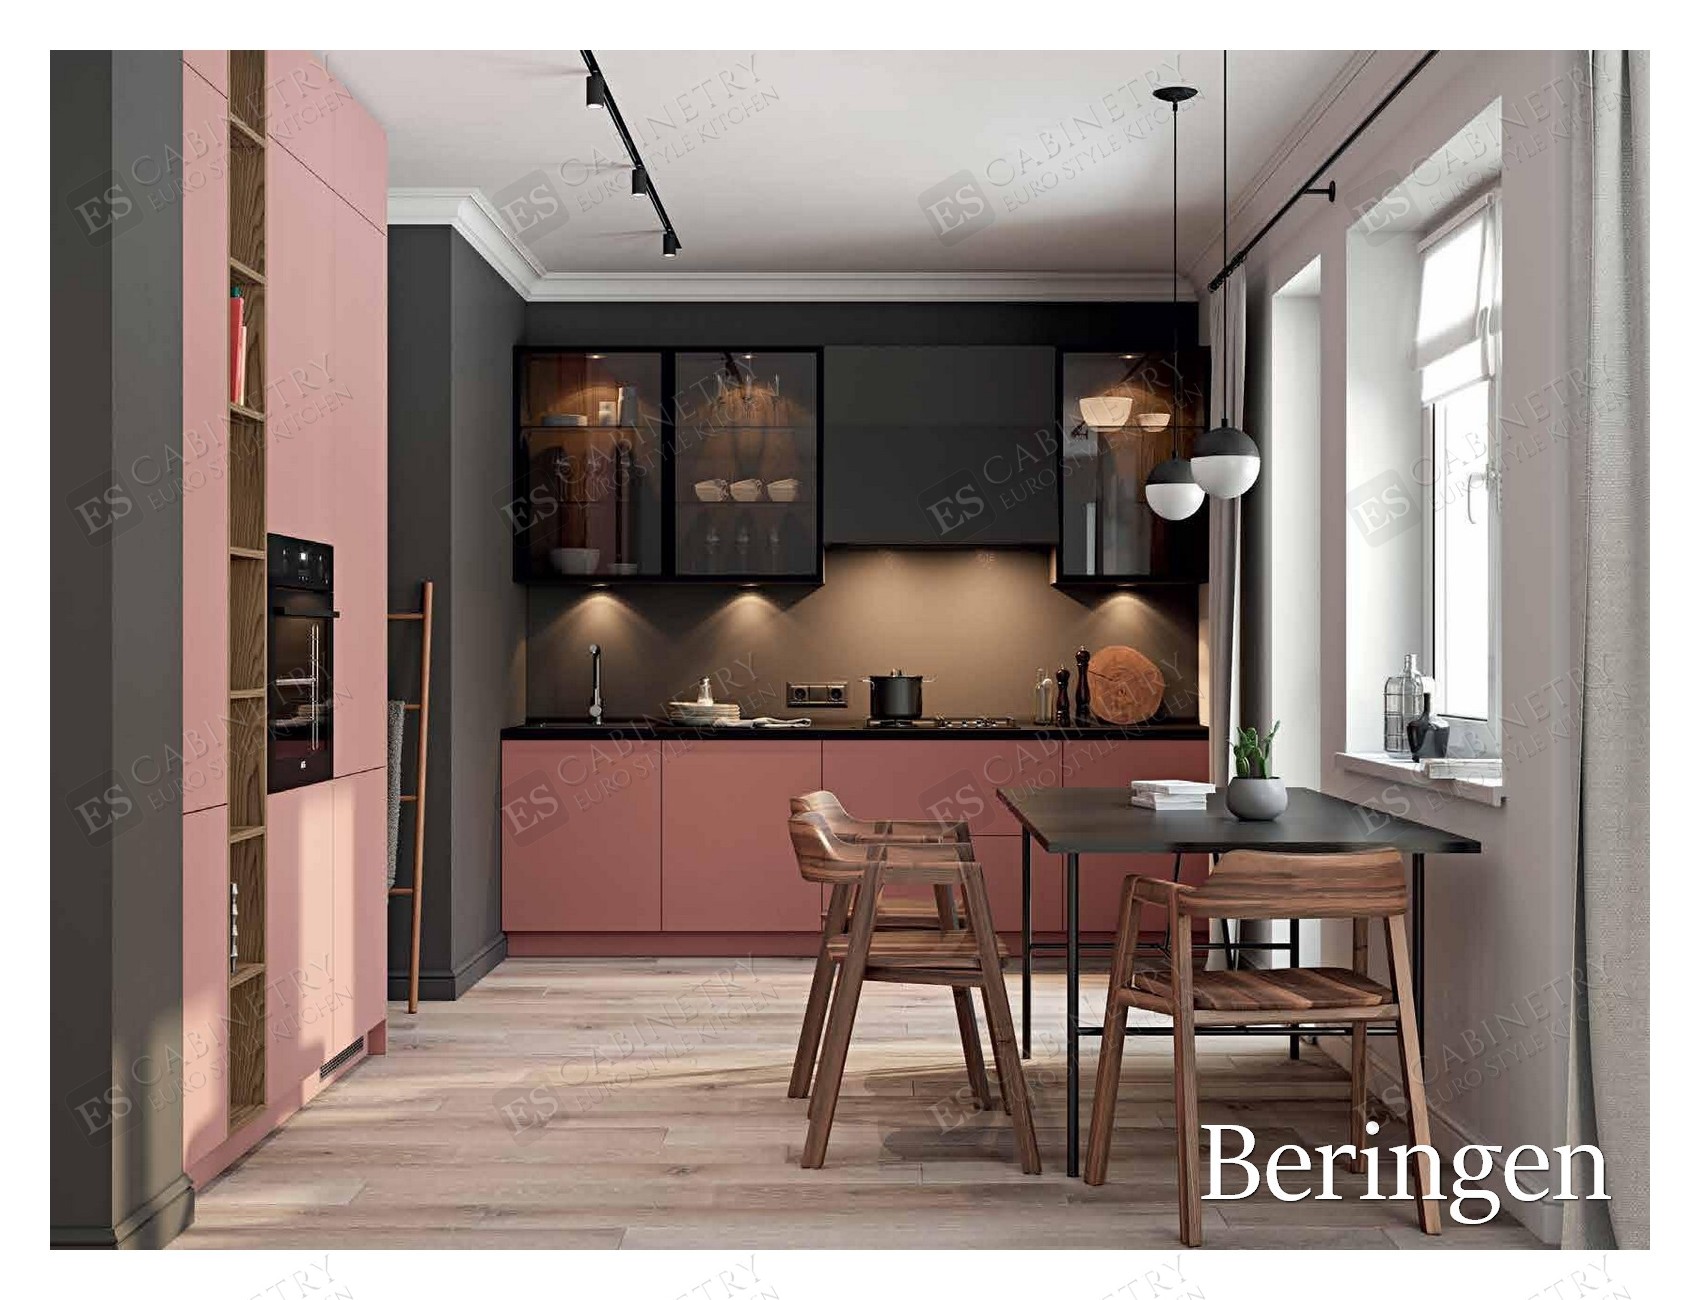 Beringer | European design kitchens